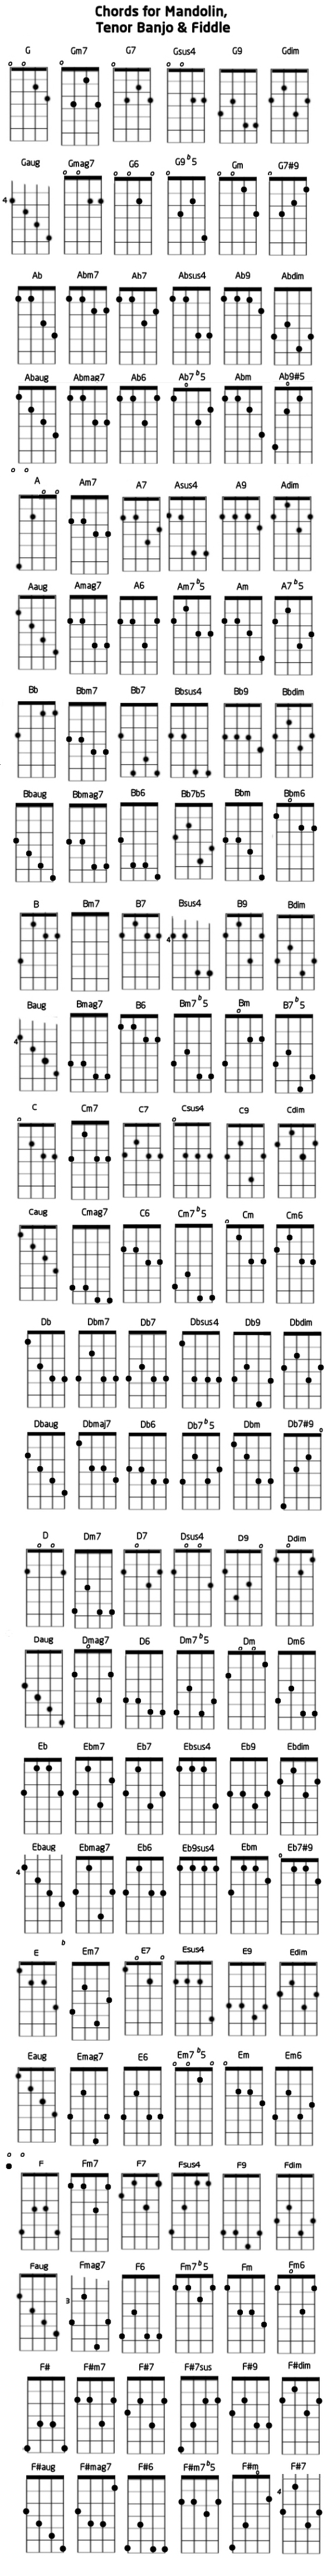 Chord sheet full Jan 2013